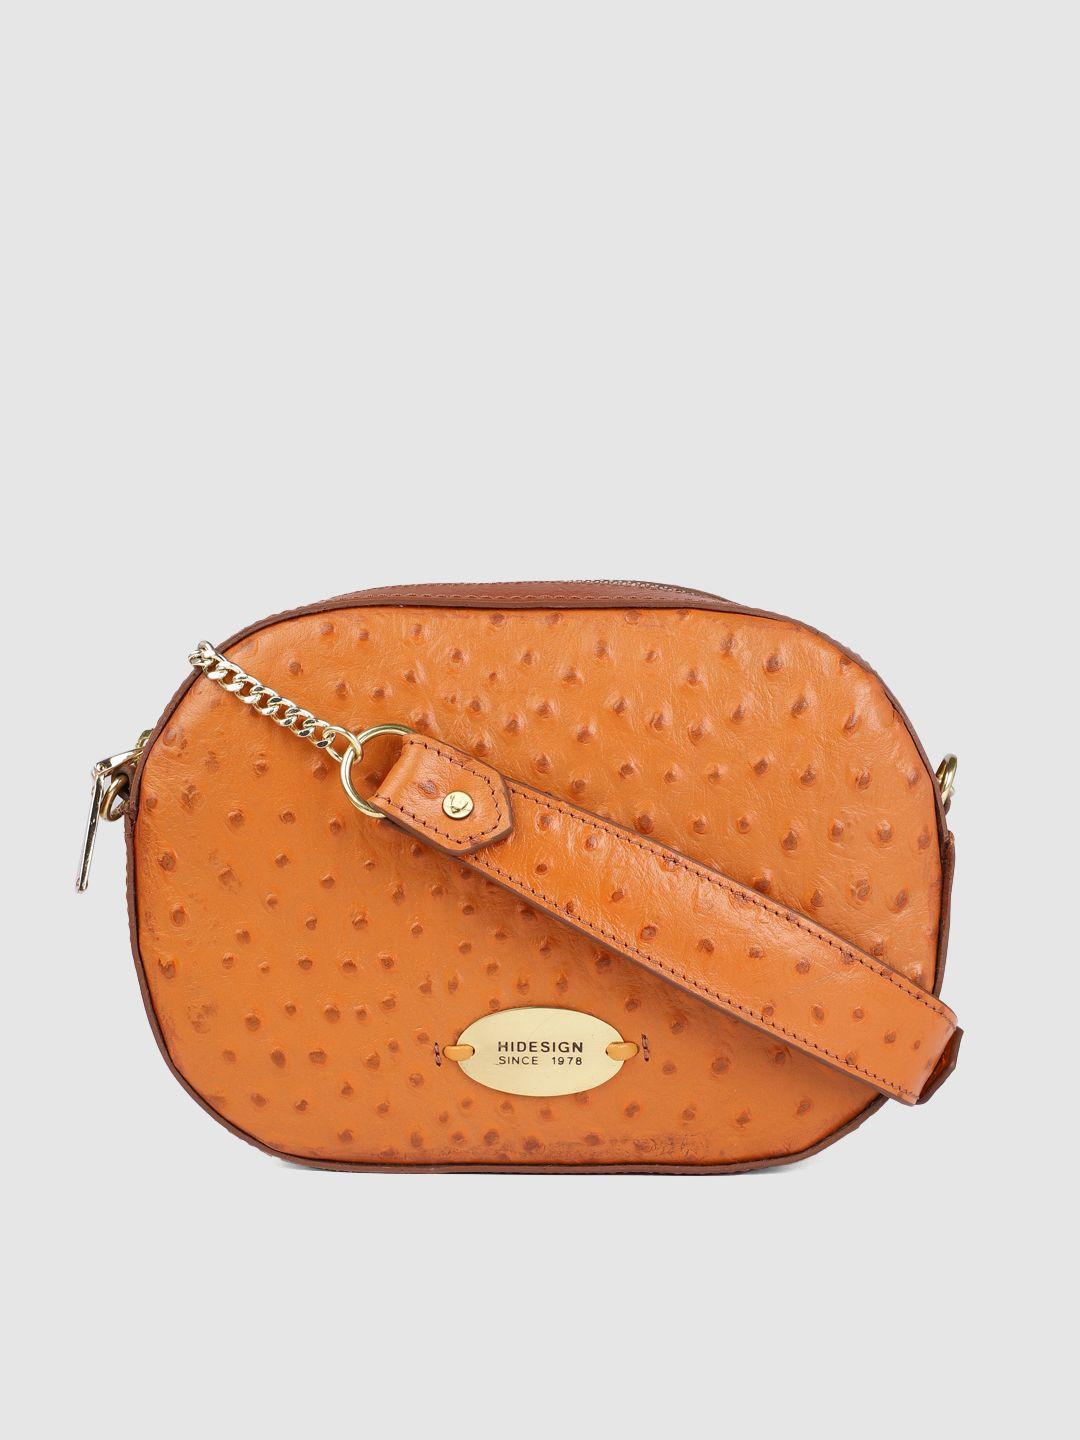 hidesign tan brown geometric textured ee morocco leather sling bag